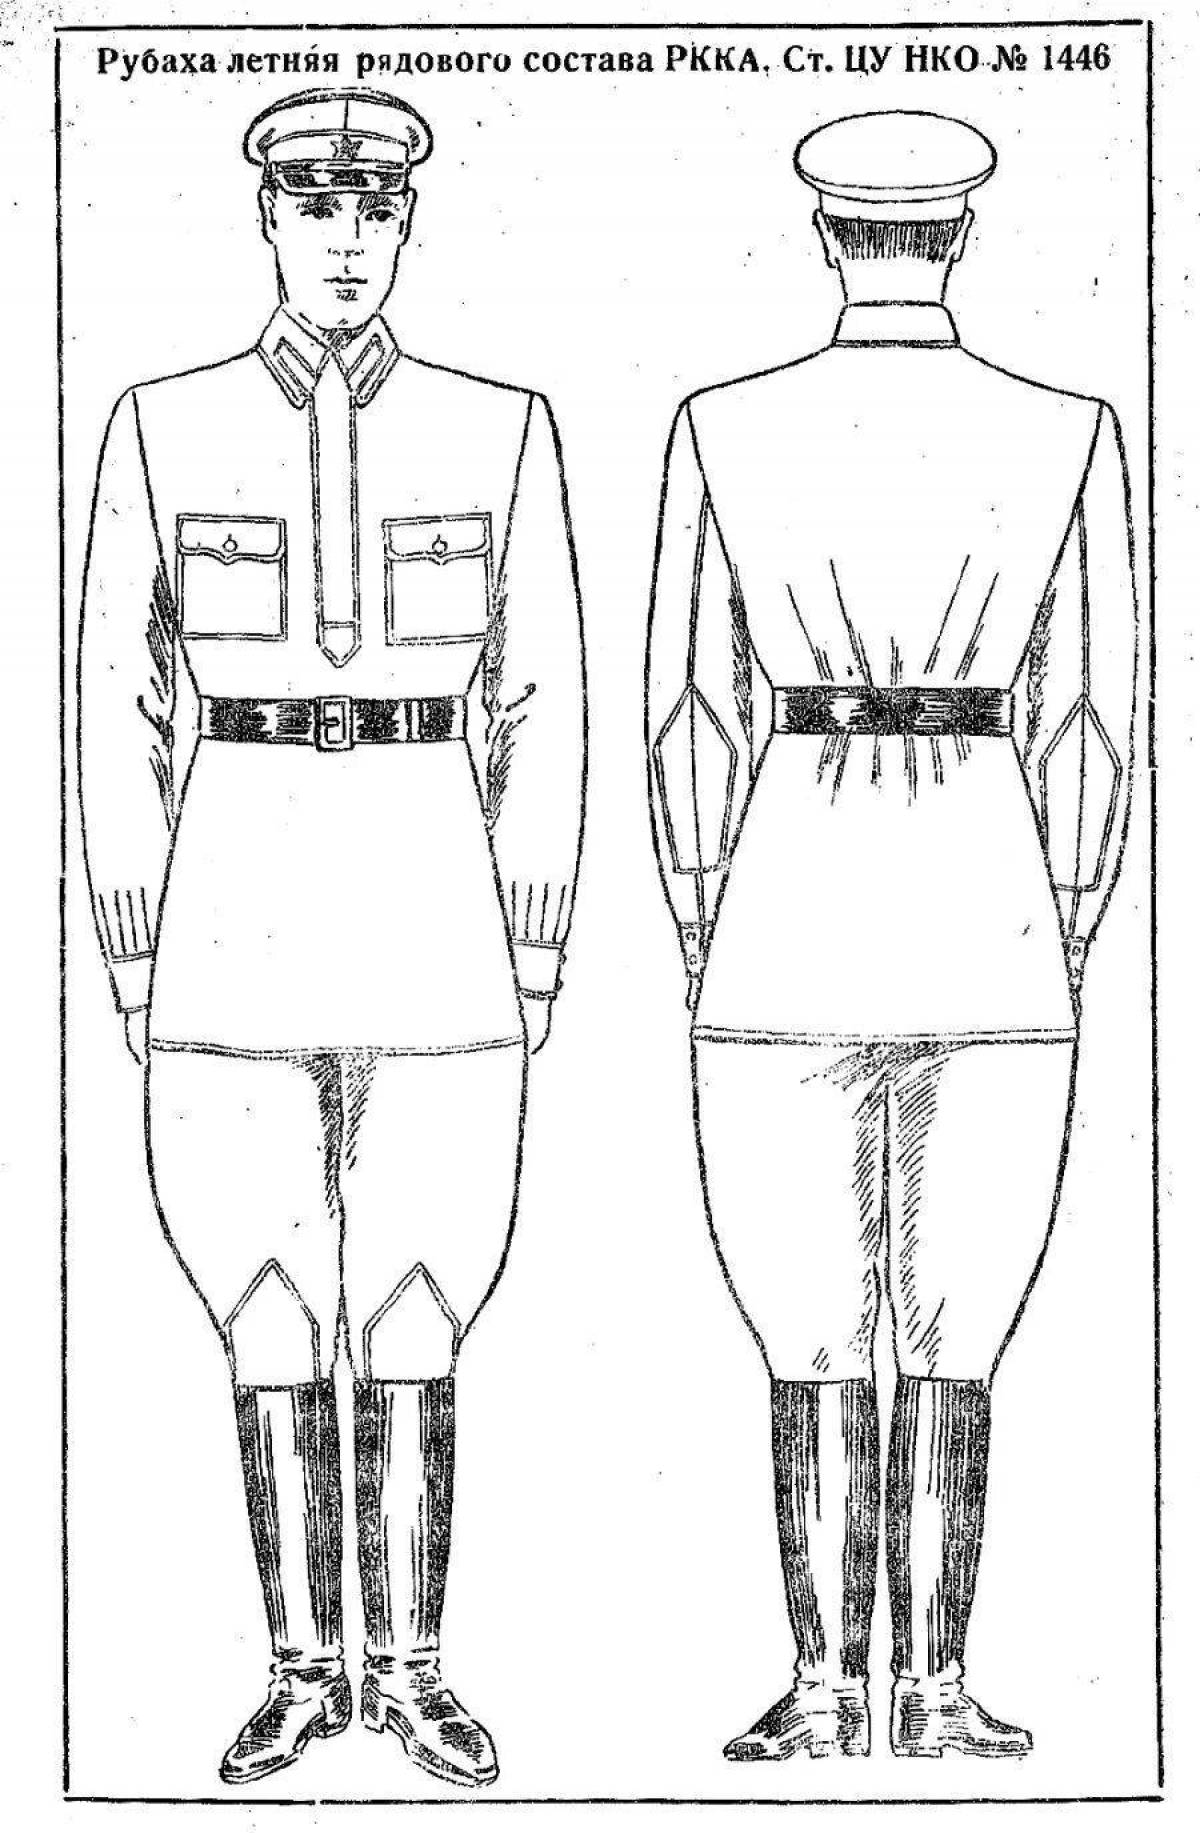 Attractive military uniform coloring book